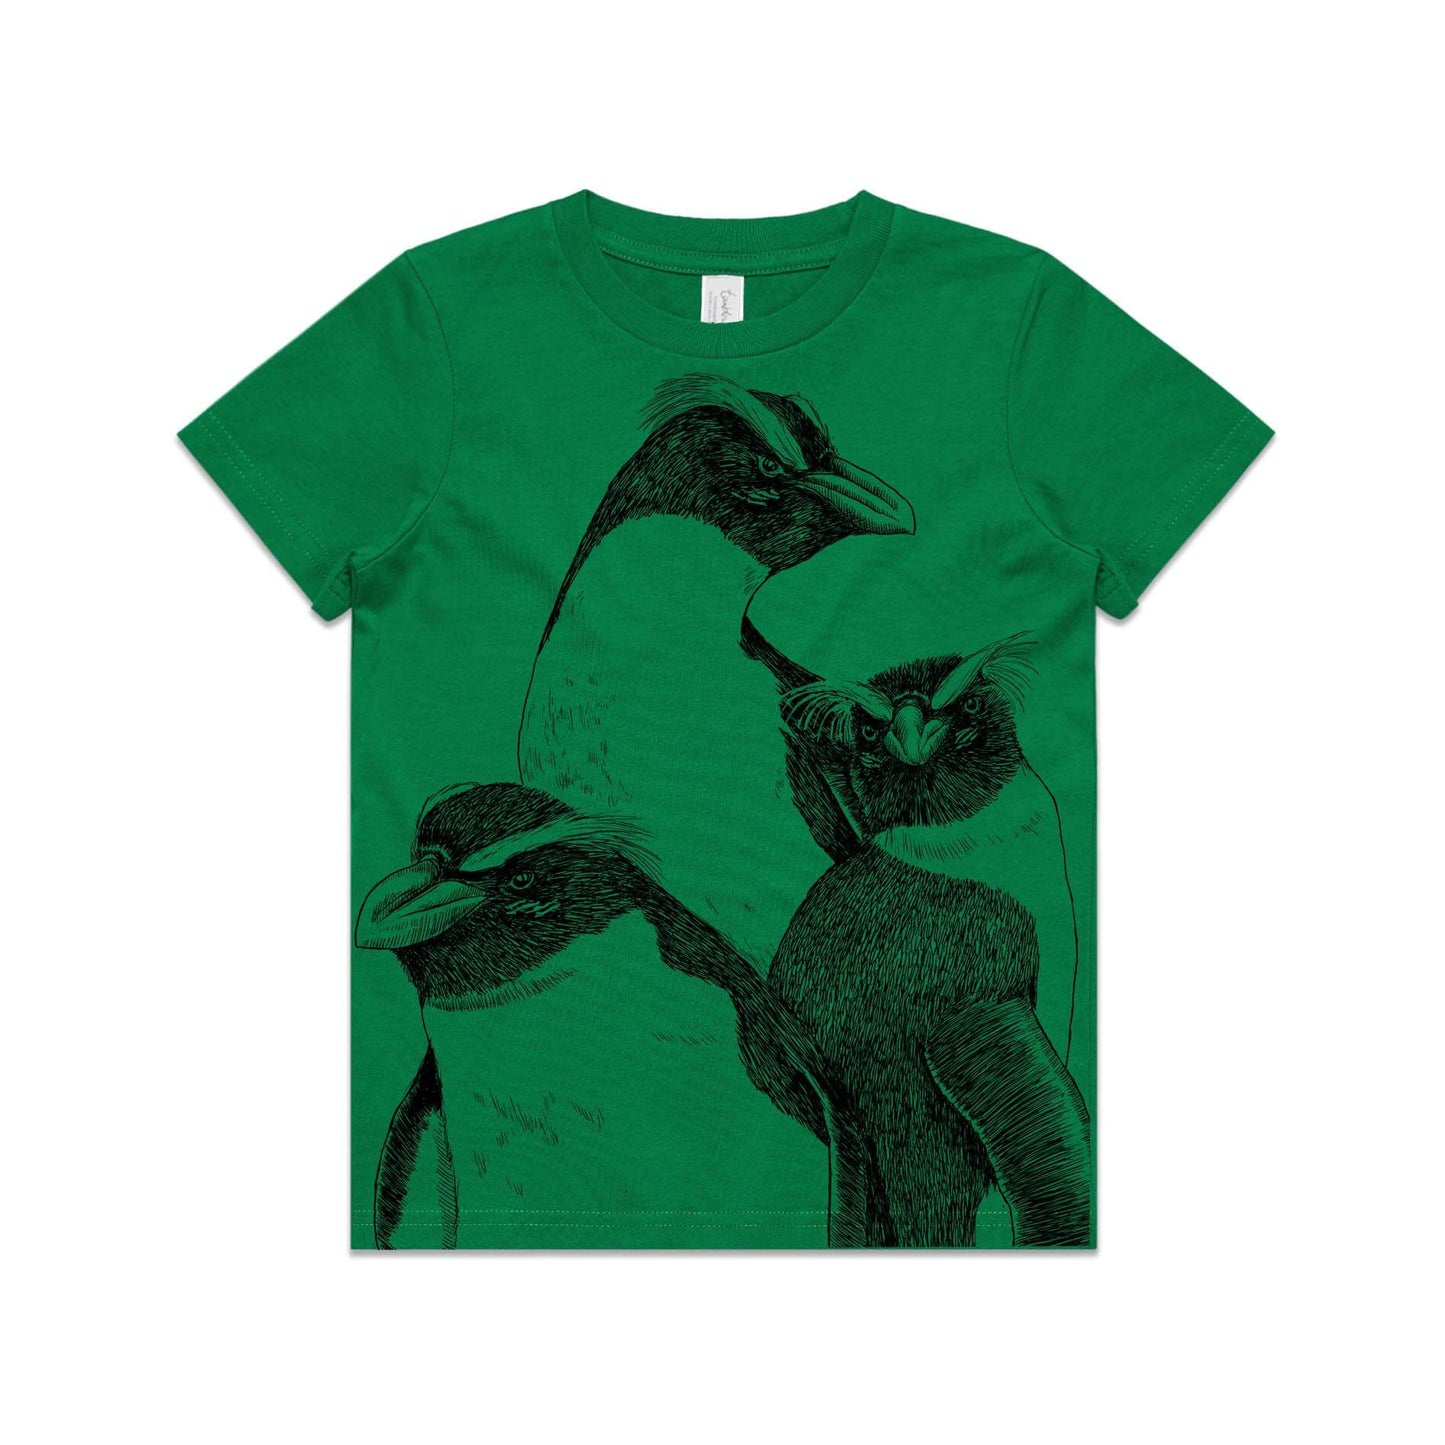 Green, cotton kids' t-shirt with screen printed Kids tawaki/fiordland crested penguin design.